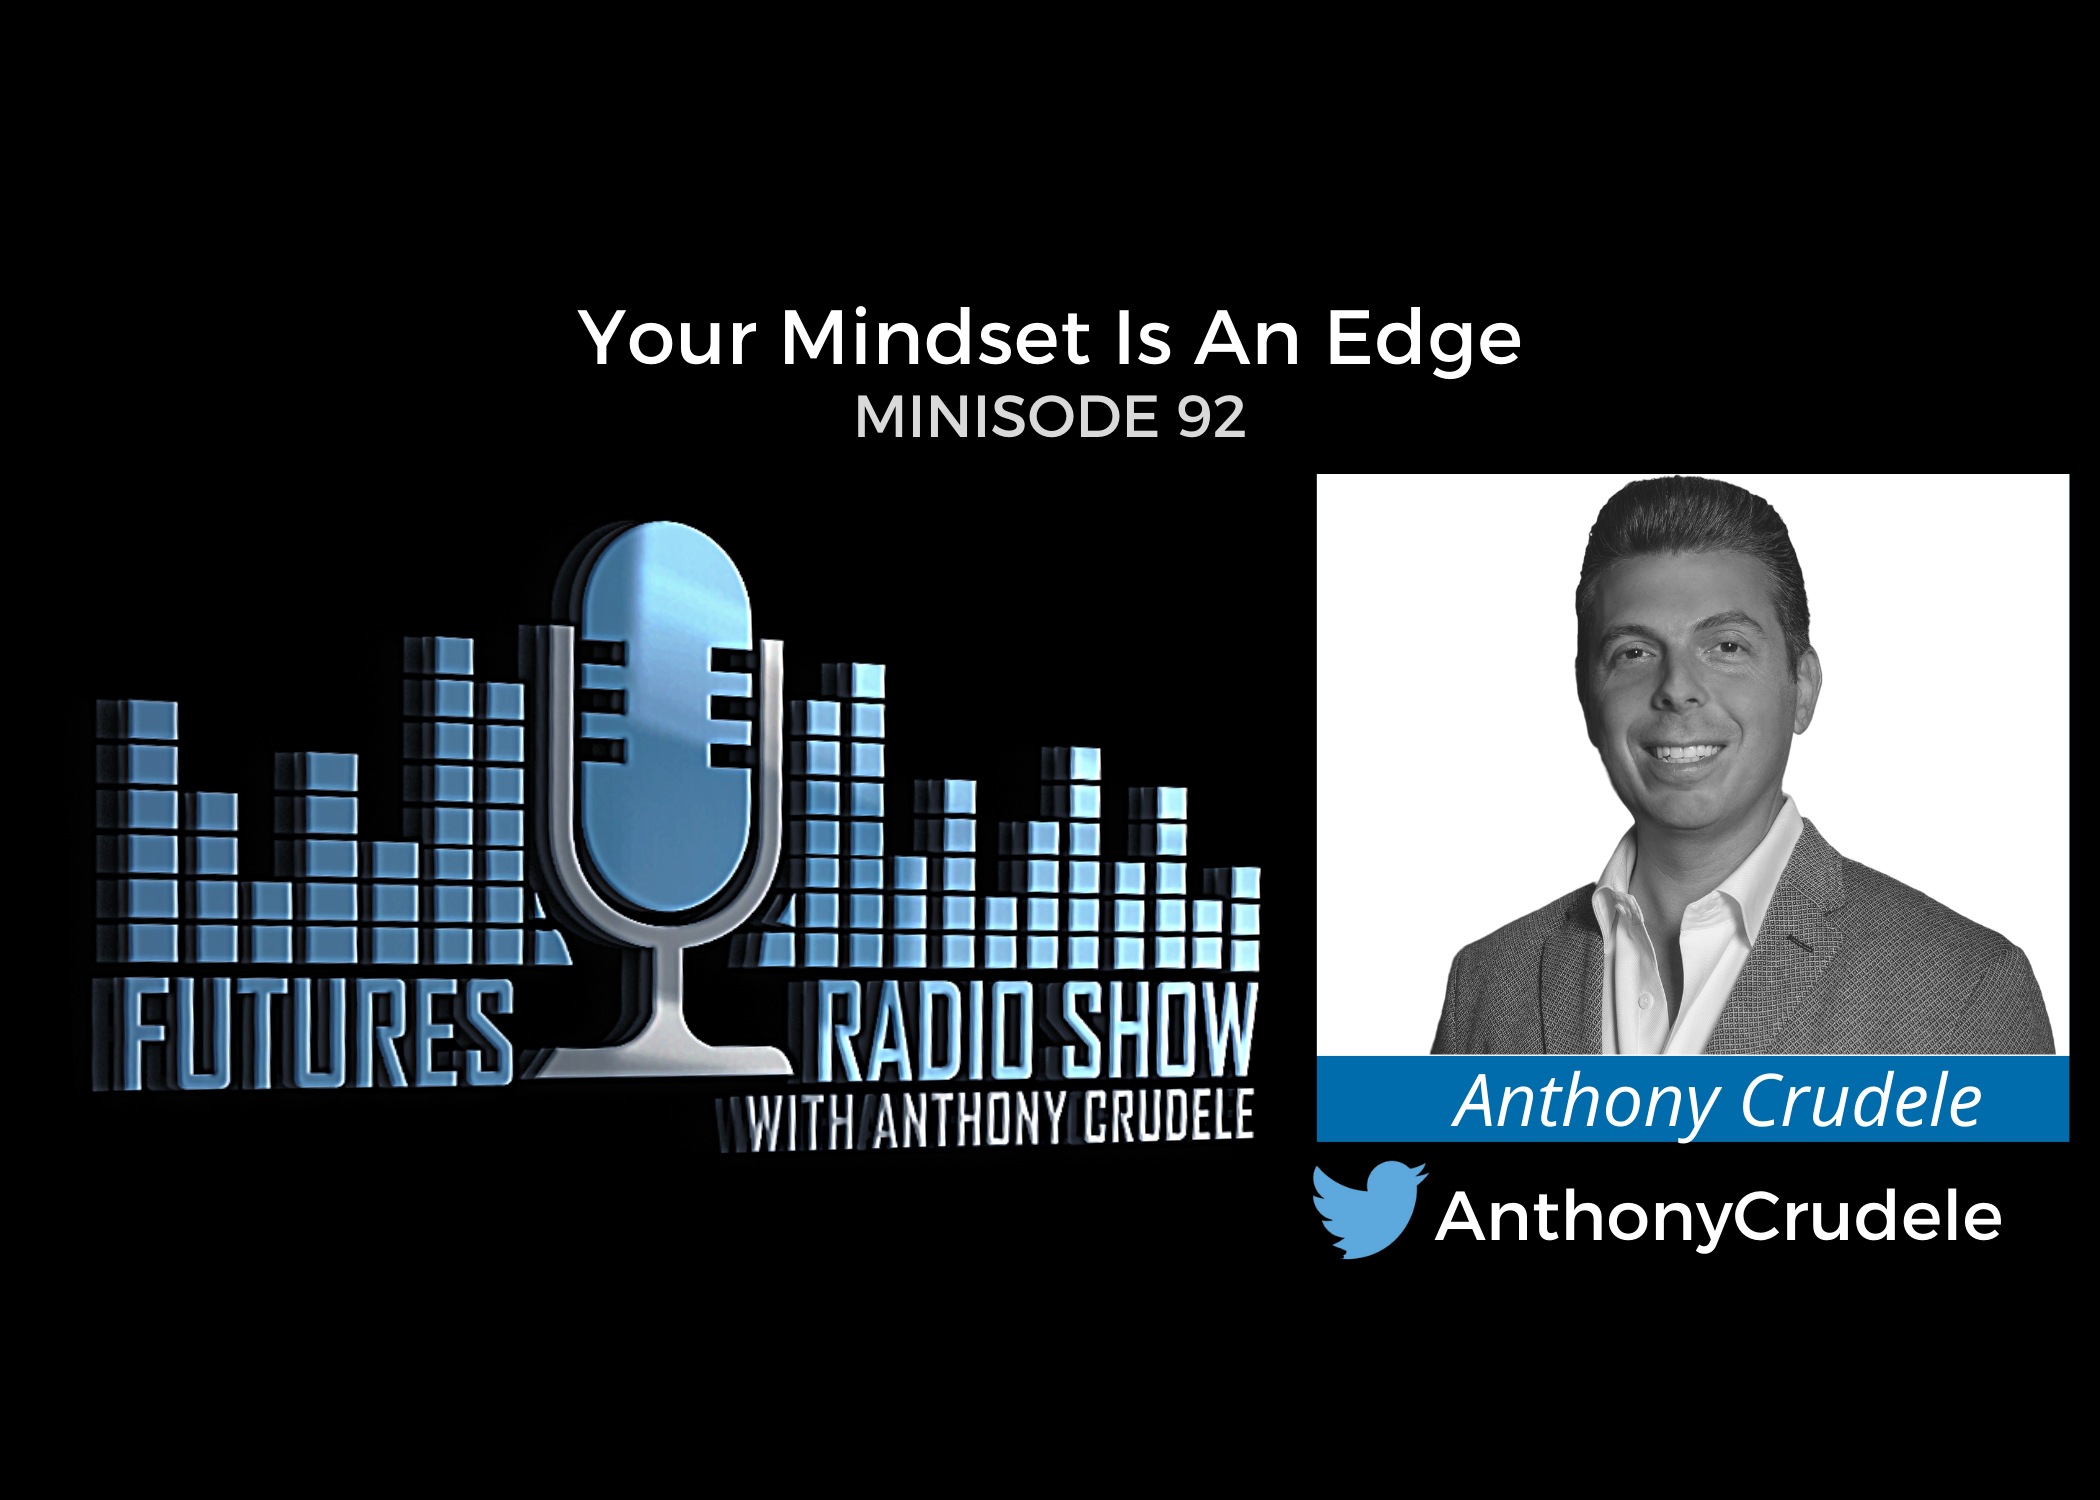 Your Mindset Is An Edge – Anthony Crudele